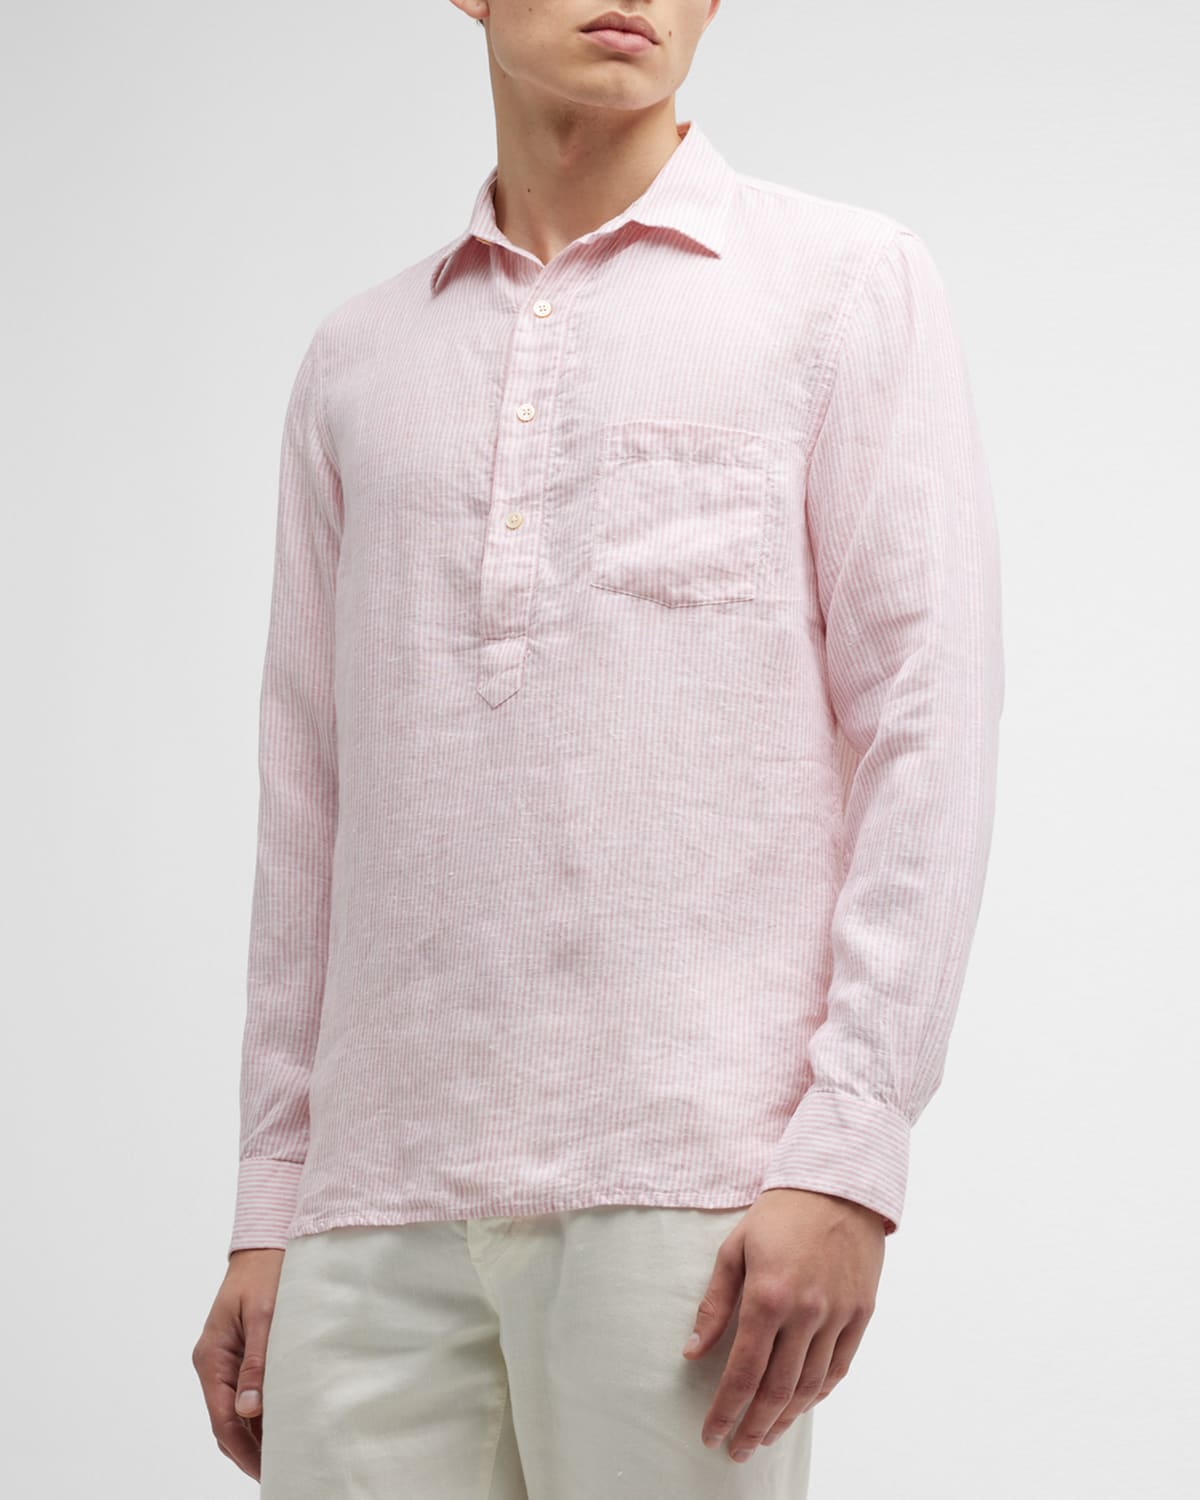 Swims Amalfi Stripe Linen Popover Shirt In Blush Pink